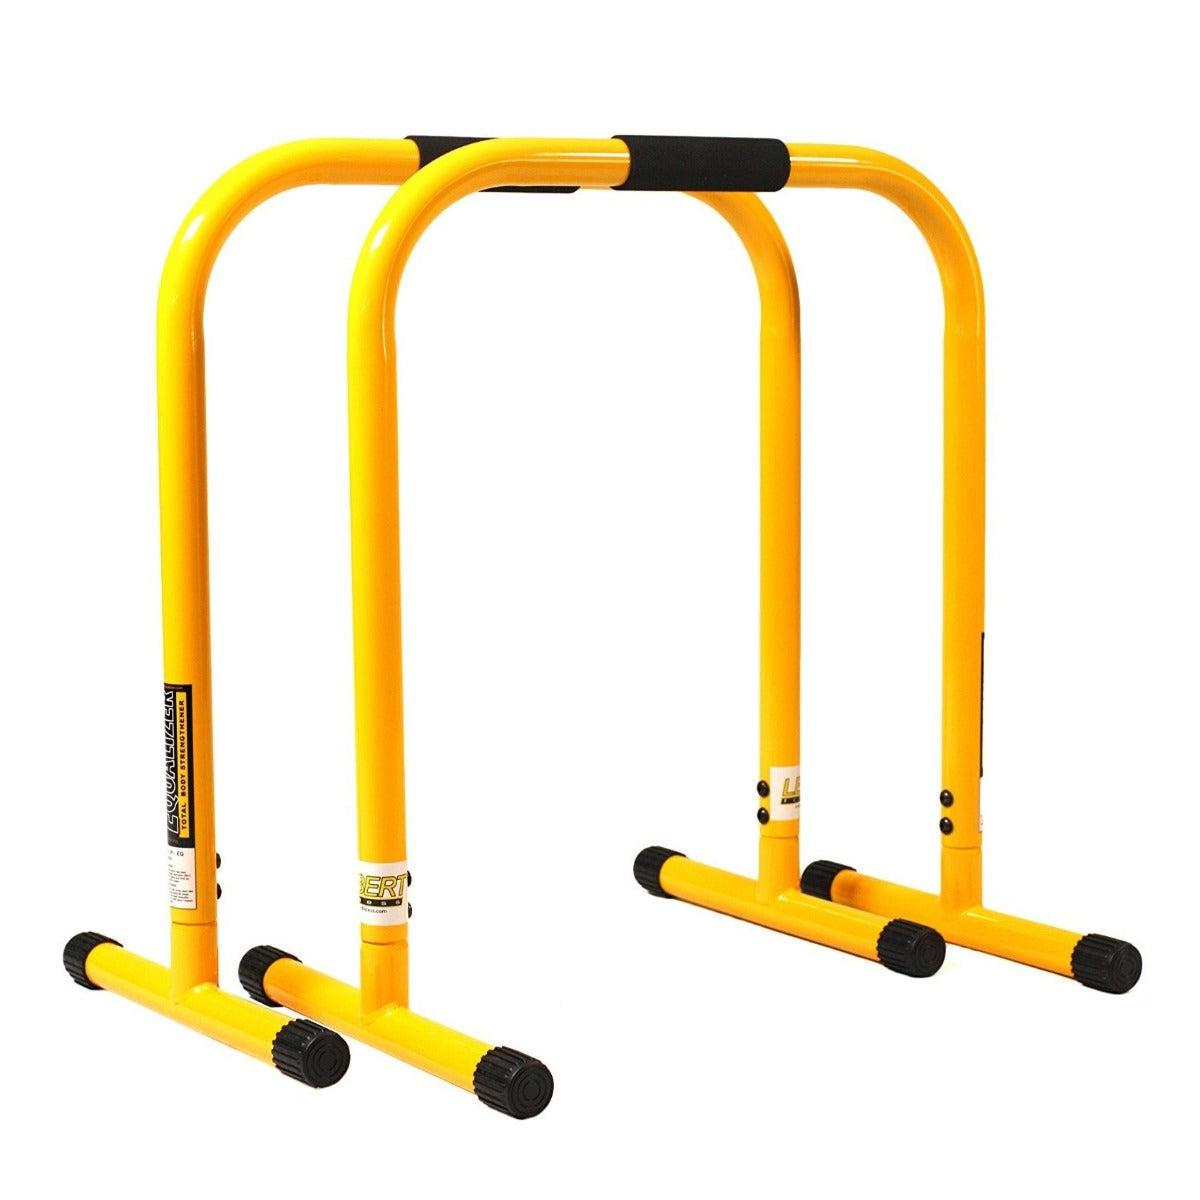 Lebert Equalizer Total Body Strengthener - Yellow